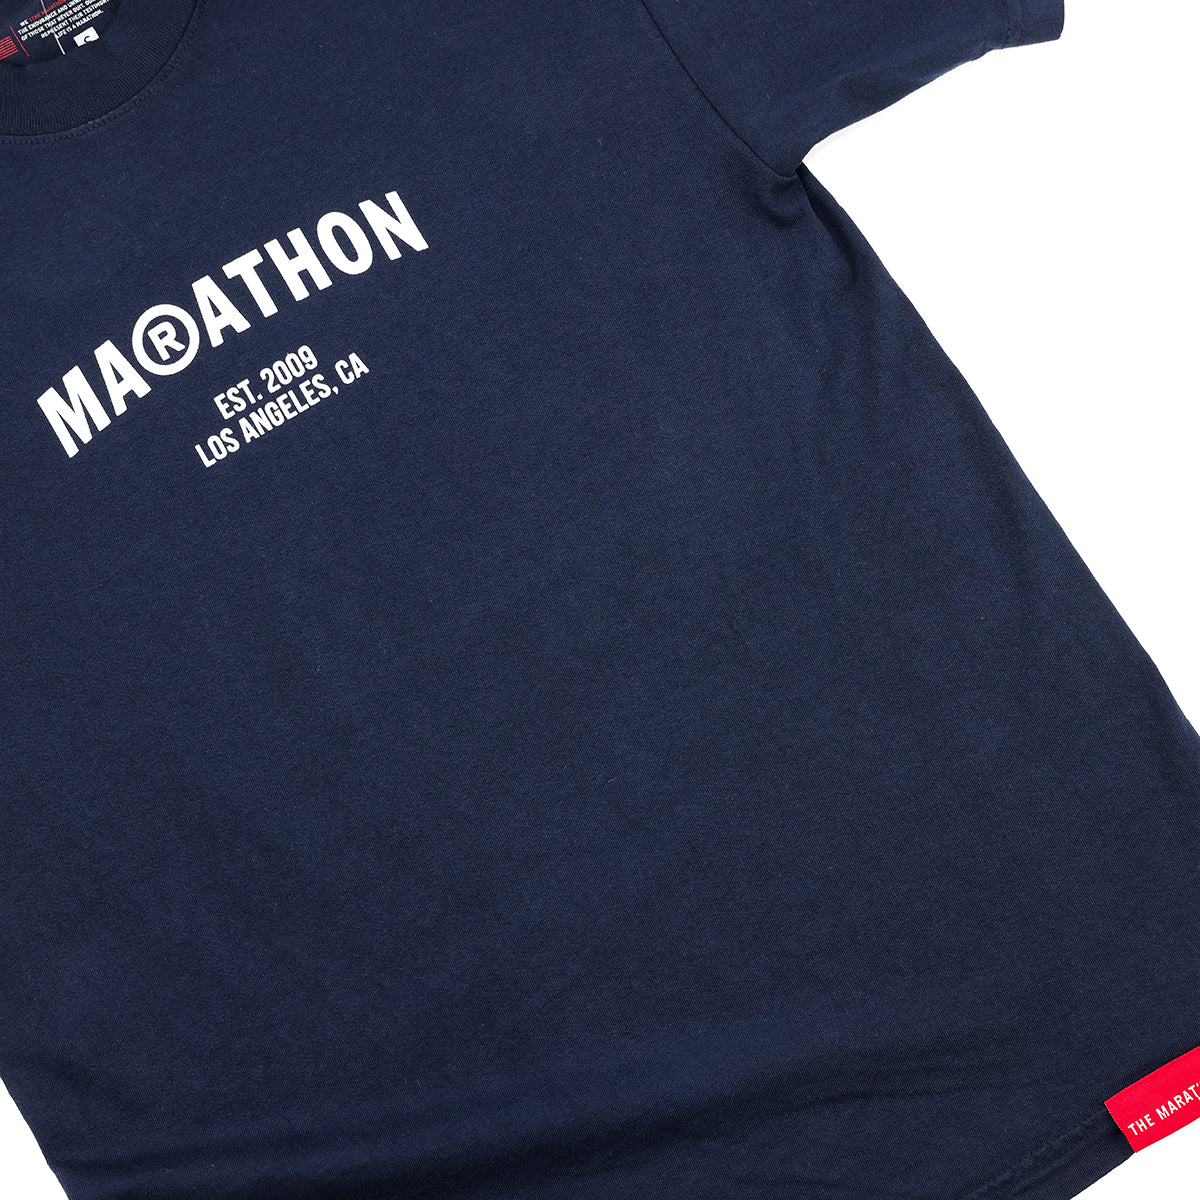 Marathon Registered T-Shirt - Navy/White - Detail